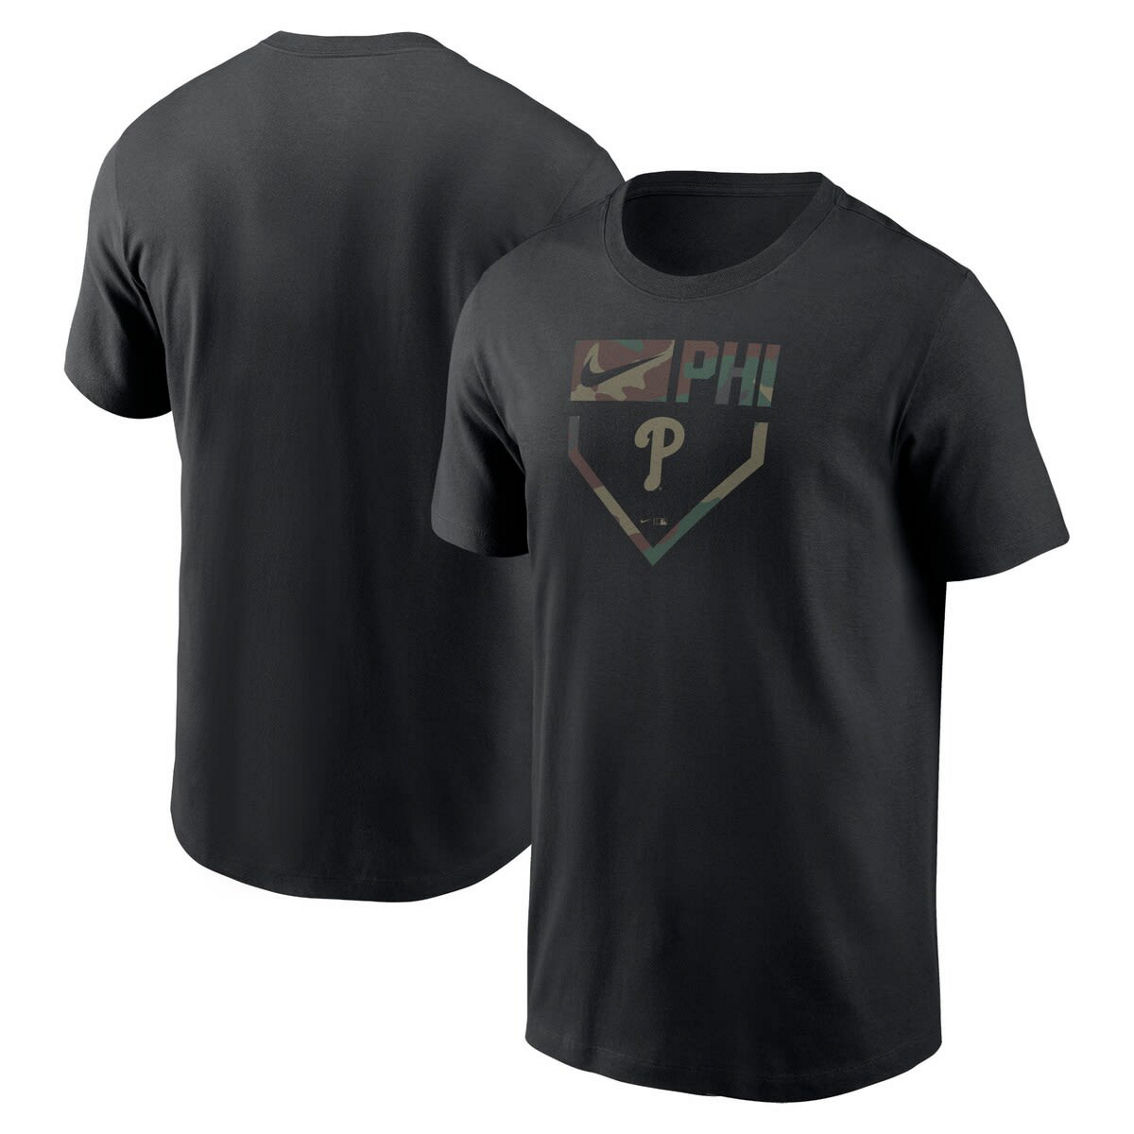 Nike Men's Black Philadelphia Phillies Camo T-Shirt - Image 2 of 4